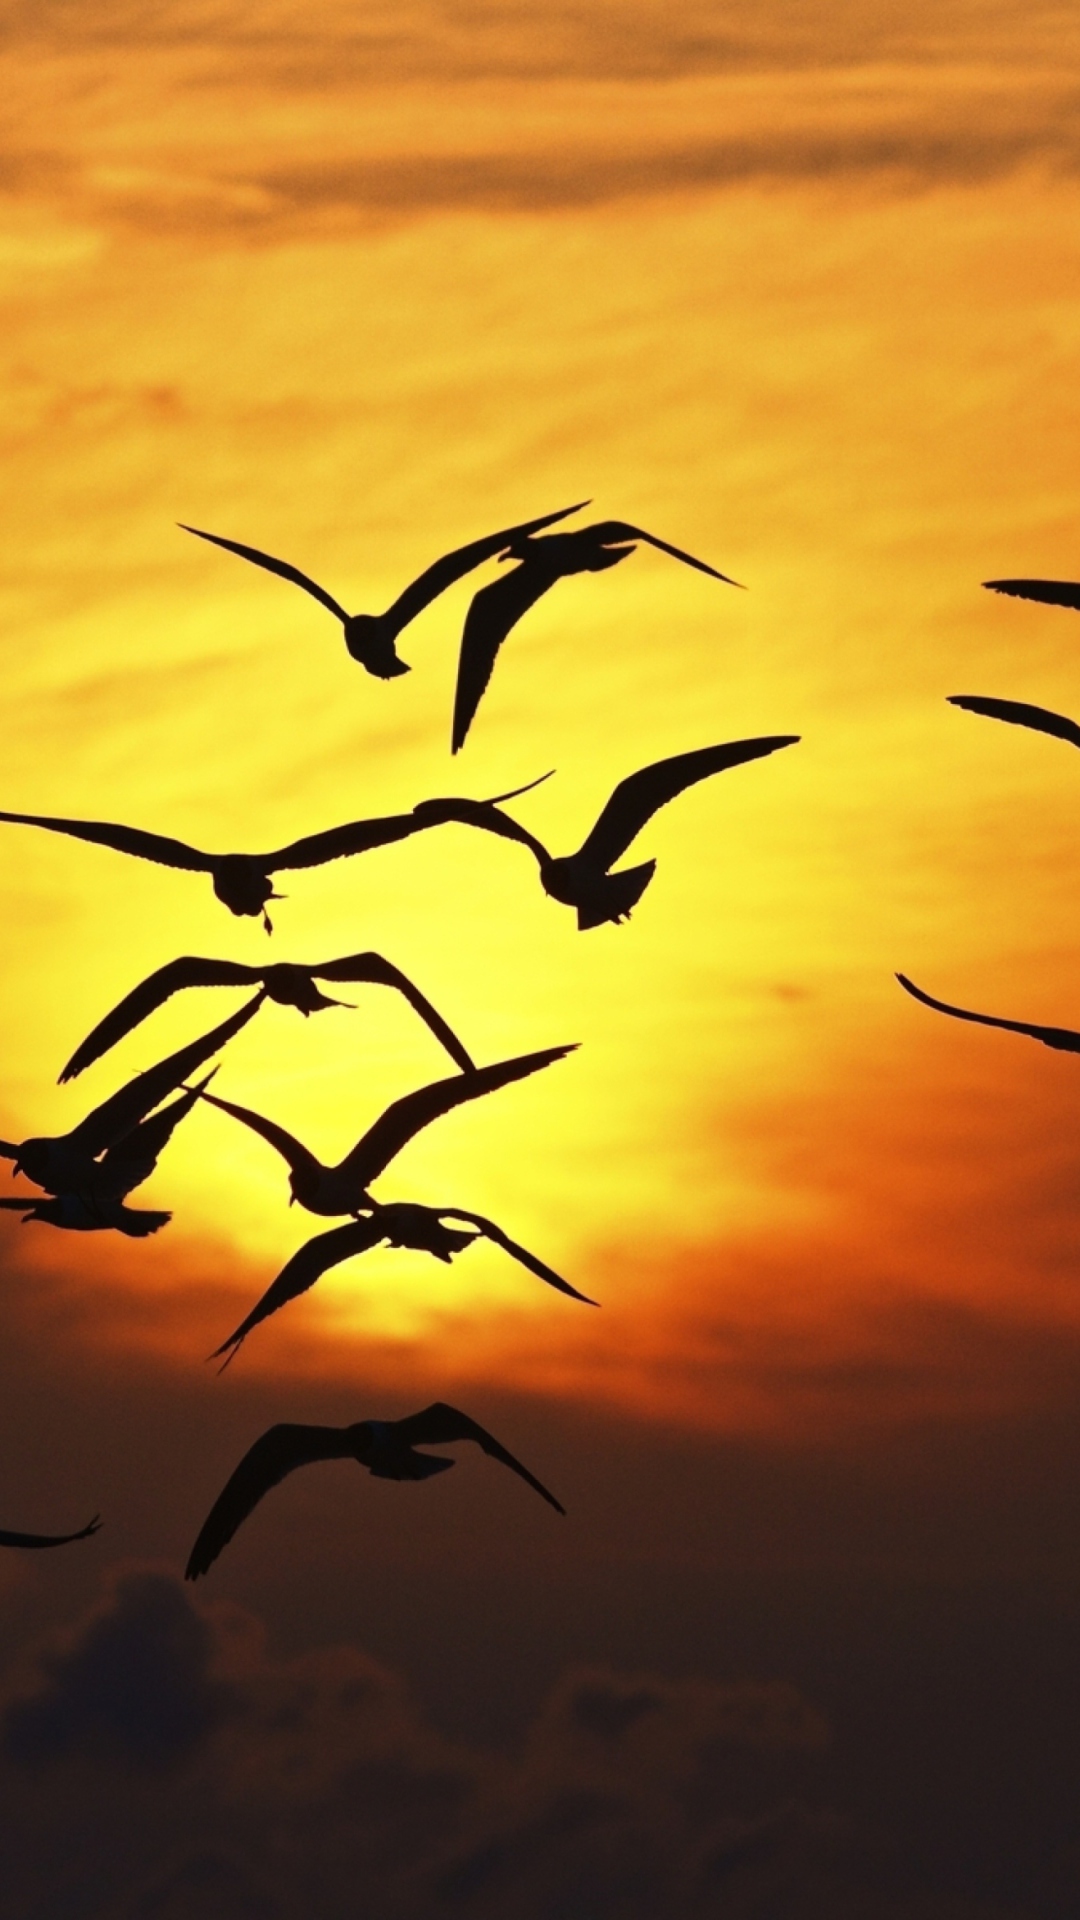 Обои Birds Silhouettes At Sunset 1080x1920